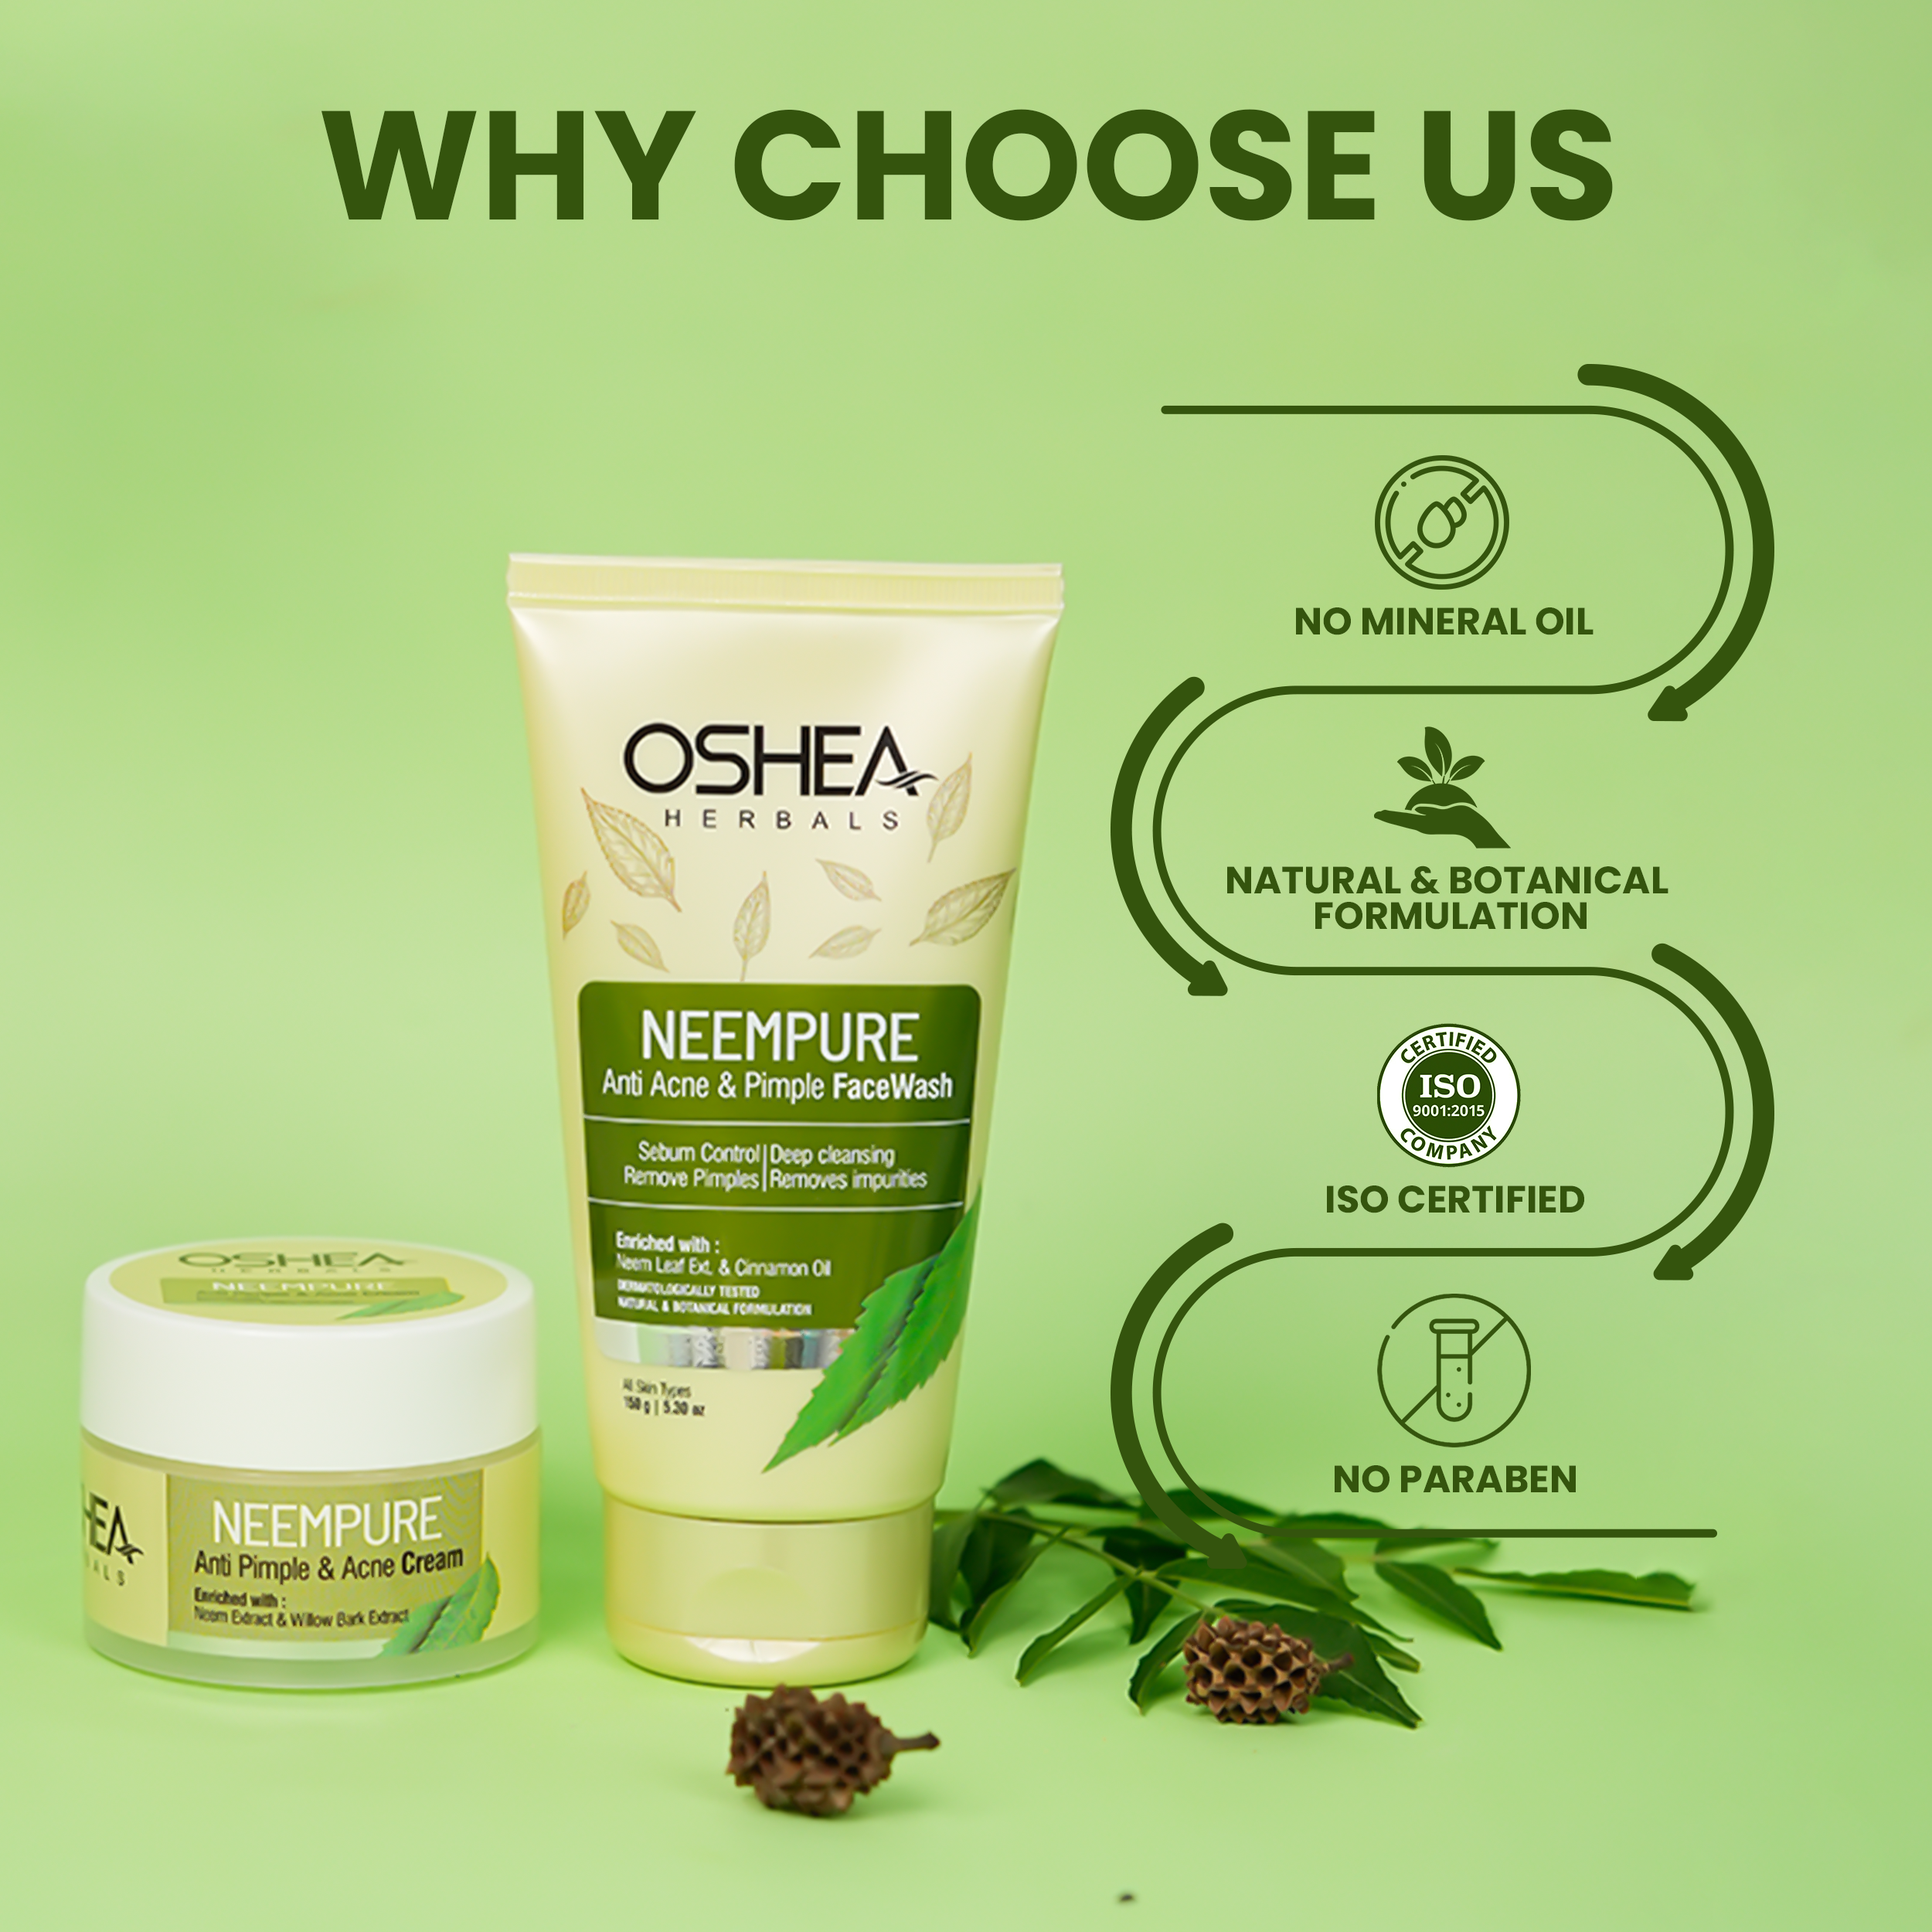 Why Choose Us Neempure Anti Acne Pimple Face Wash Neempure Anti Acne Pimple Cream Combo Oshea Herbals